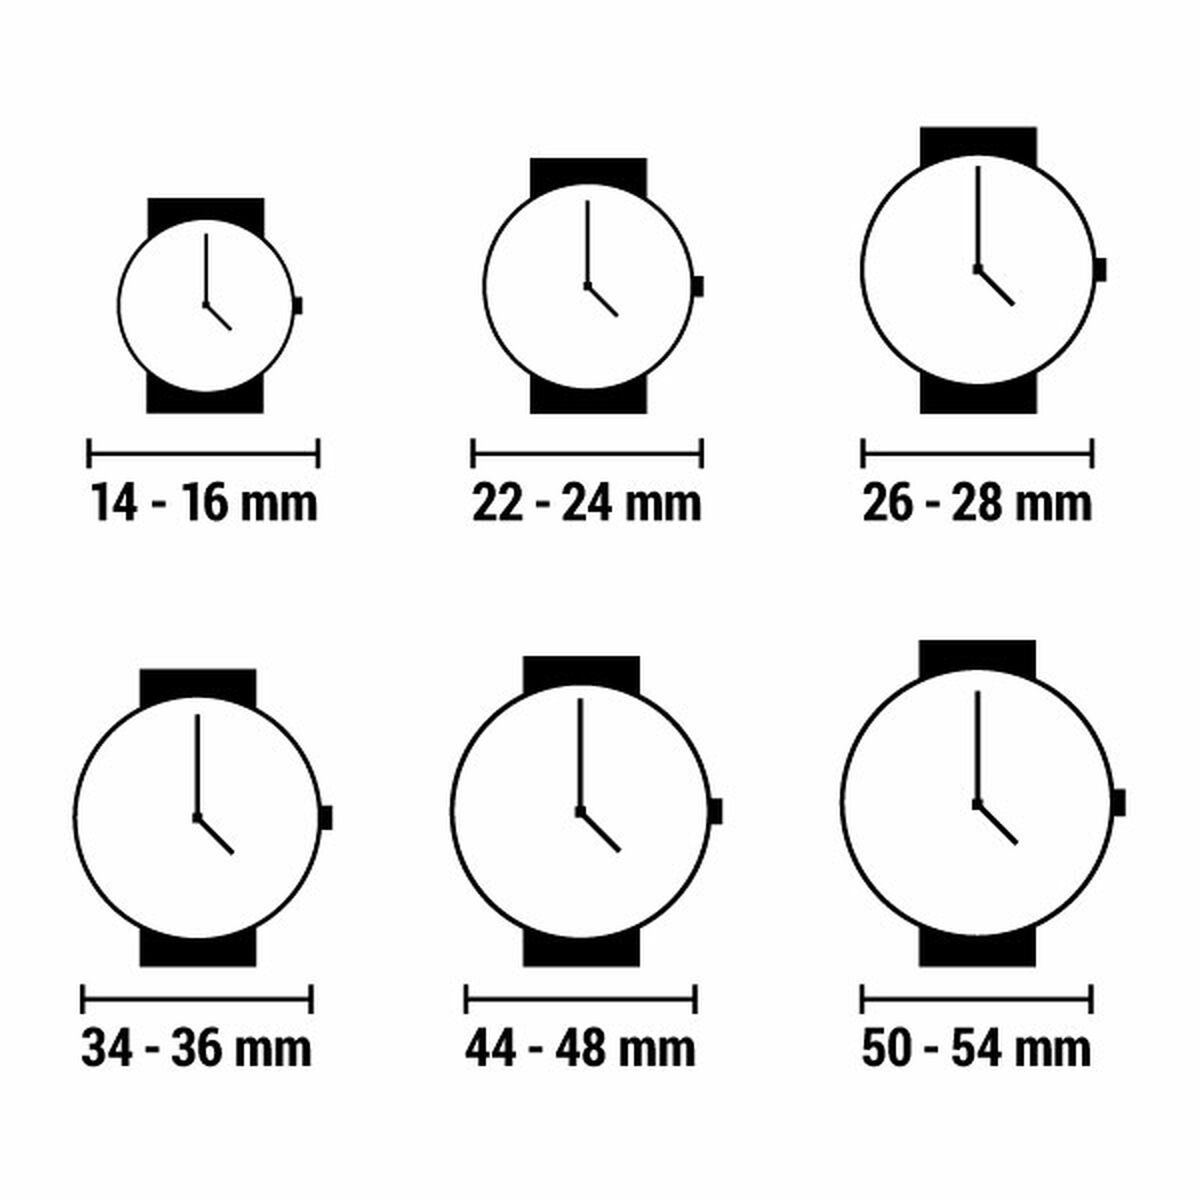 Horloge Dames Olivia Burton OB16AN05 (Ø 34 mm)